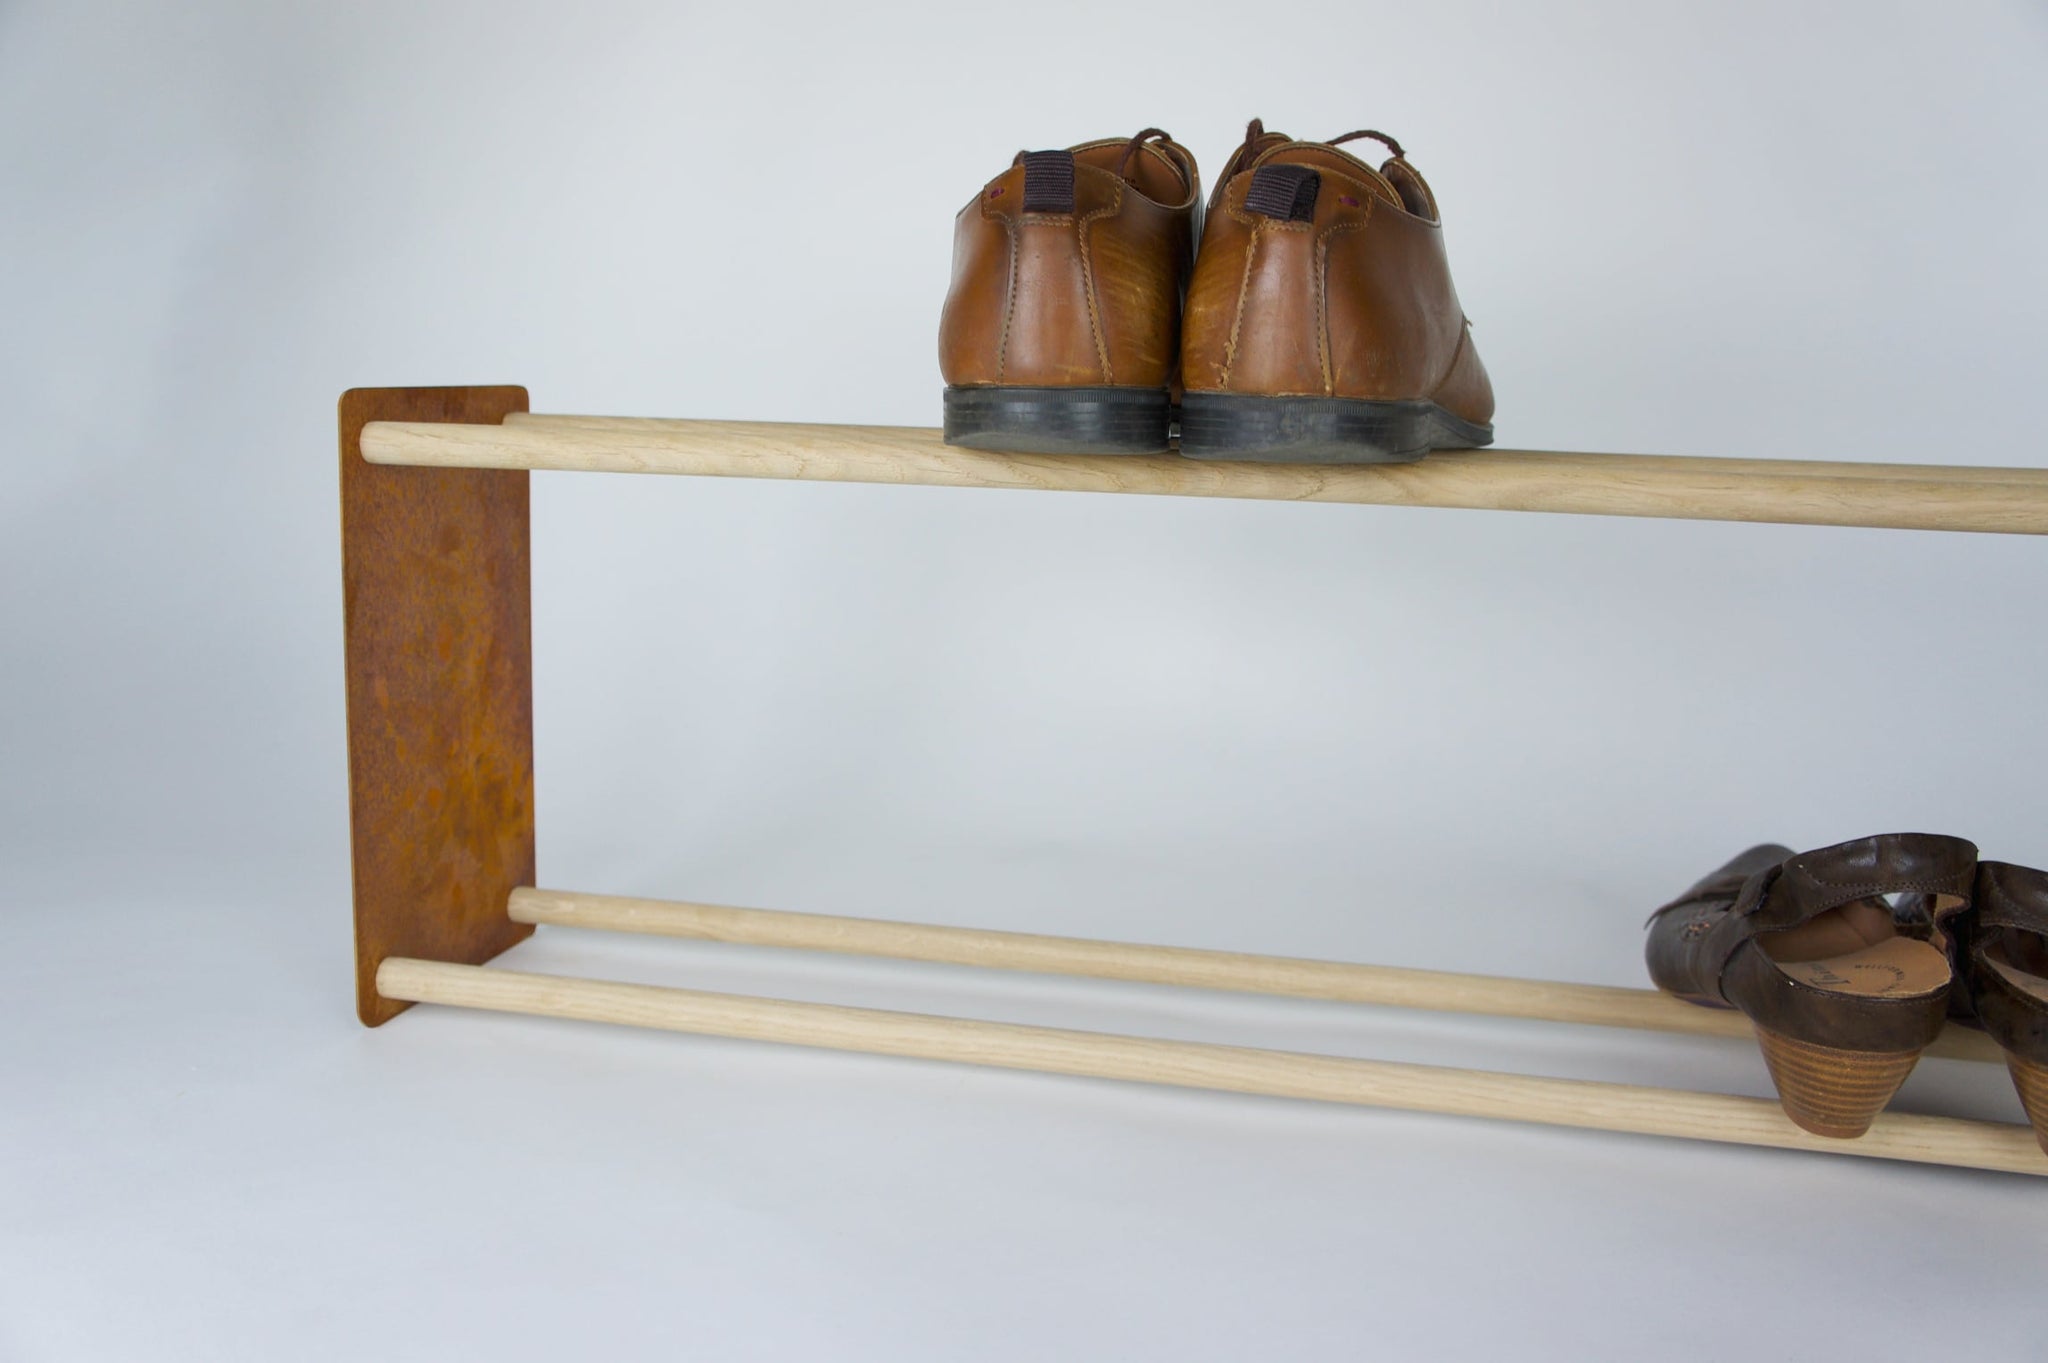 corten stahl schuhregal steel shoe rack handmade unique handgefertigt Unikat gerostet rusted oak shelf eiche regal